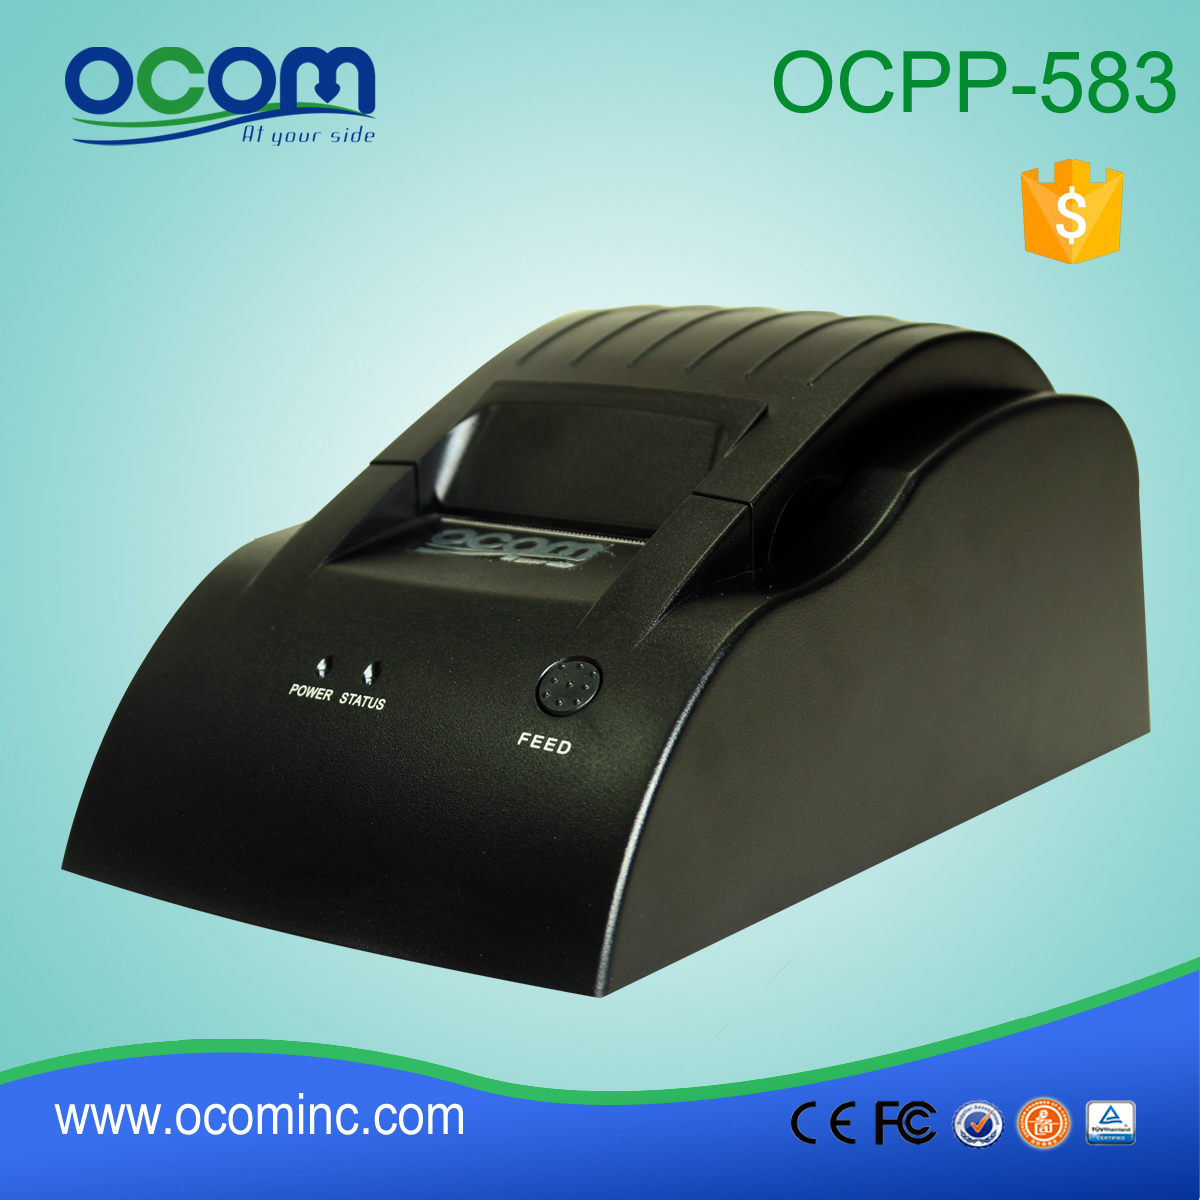 OCPP-583-L Desktop 58mm Thermal POS Receipt Printer LAN Interface